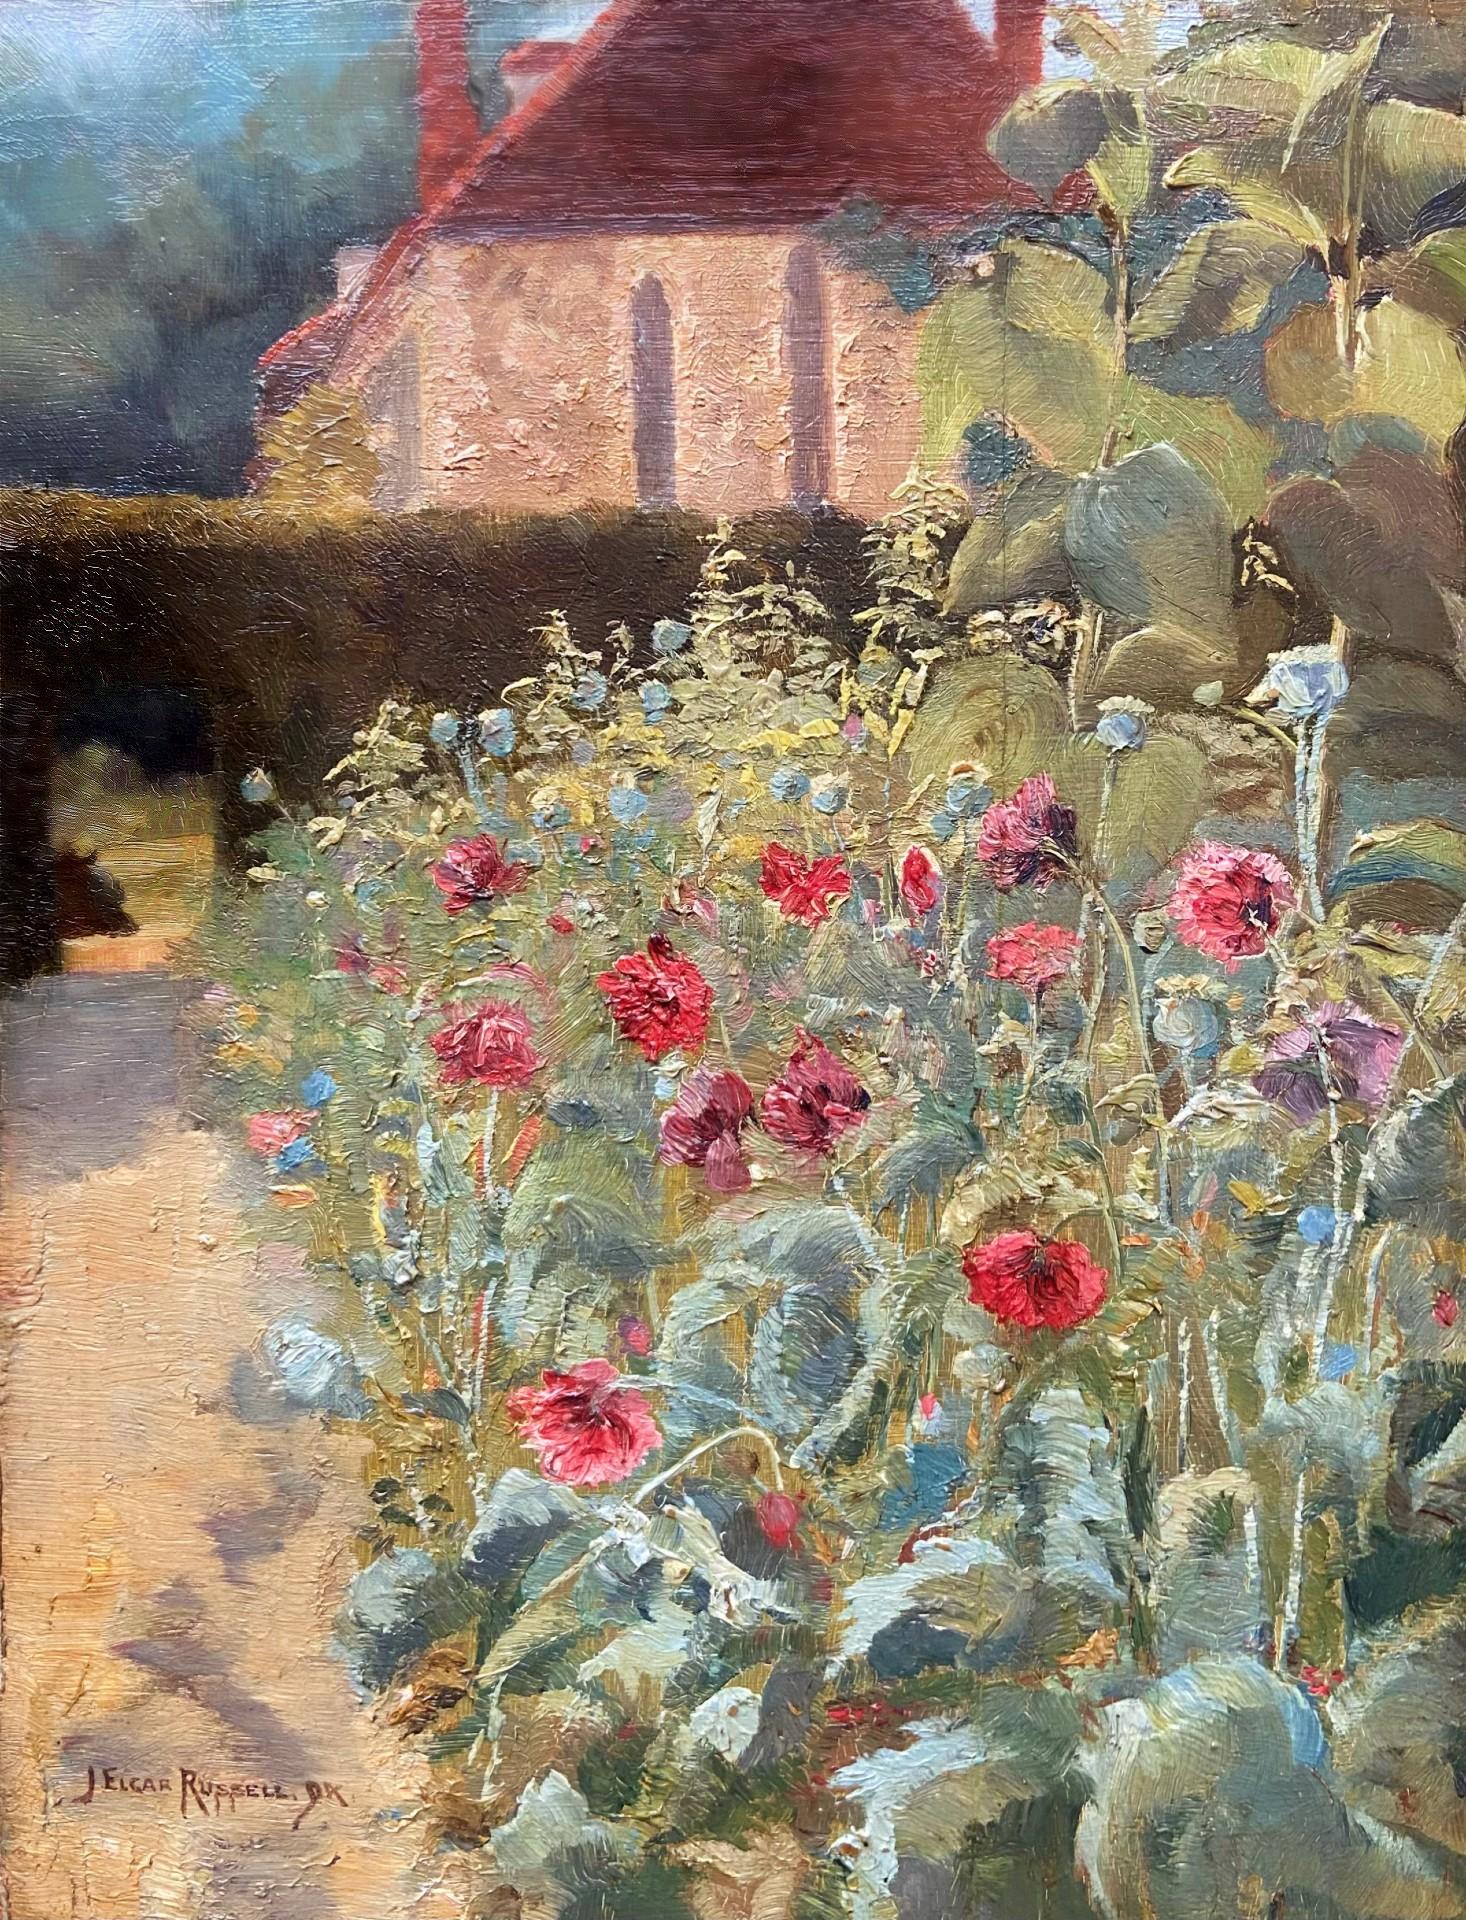 J R Elgar Russell Landscape Painting - St John's Jerusalem, Kent